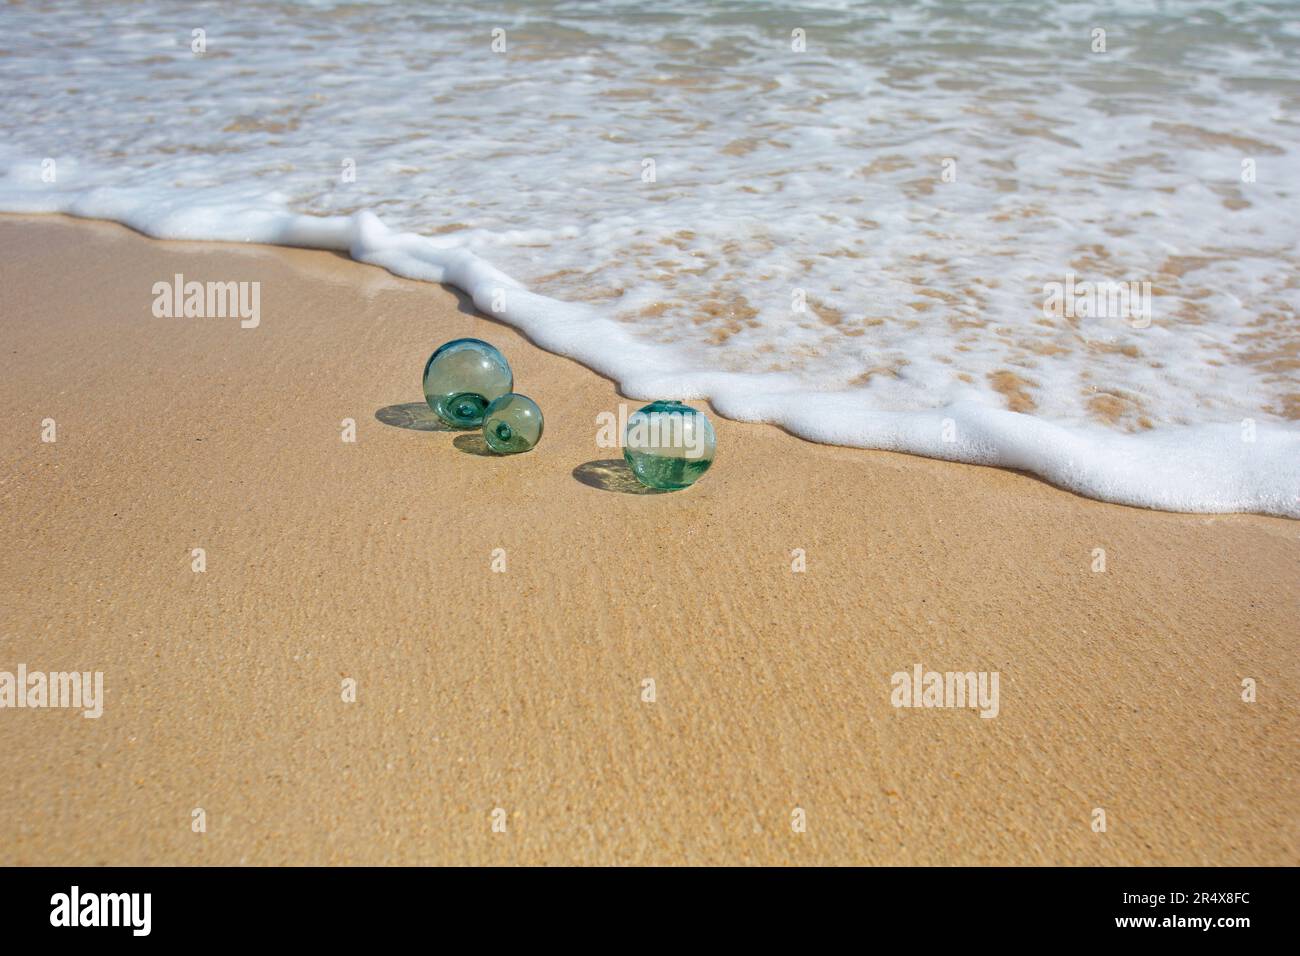 https://c8.alamy.com/comp/2R4X8FC/japanese-fishing-balls-floats-on-the-beach-north-shore-of-maui-2R4X8FC.jpg